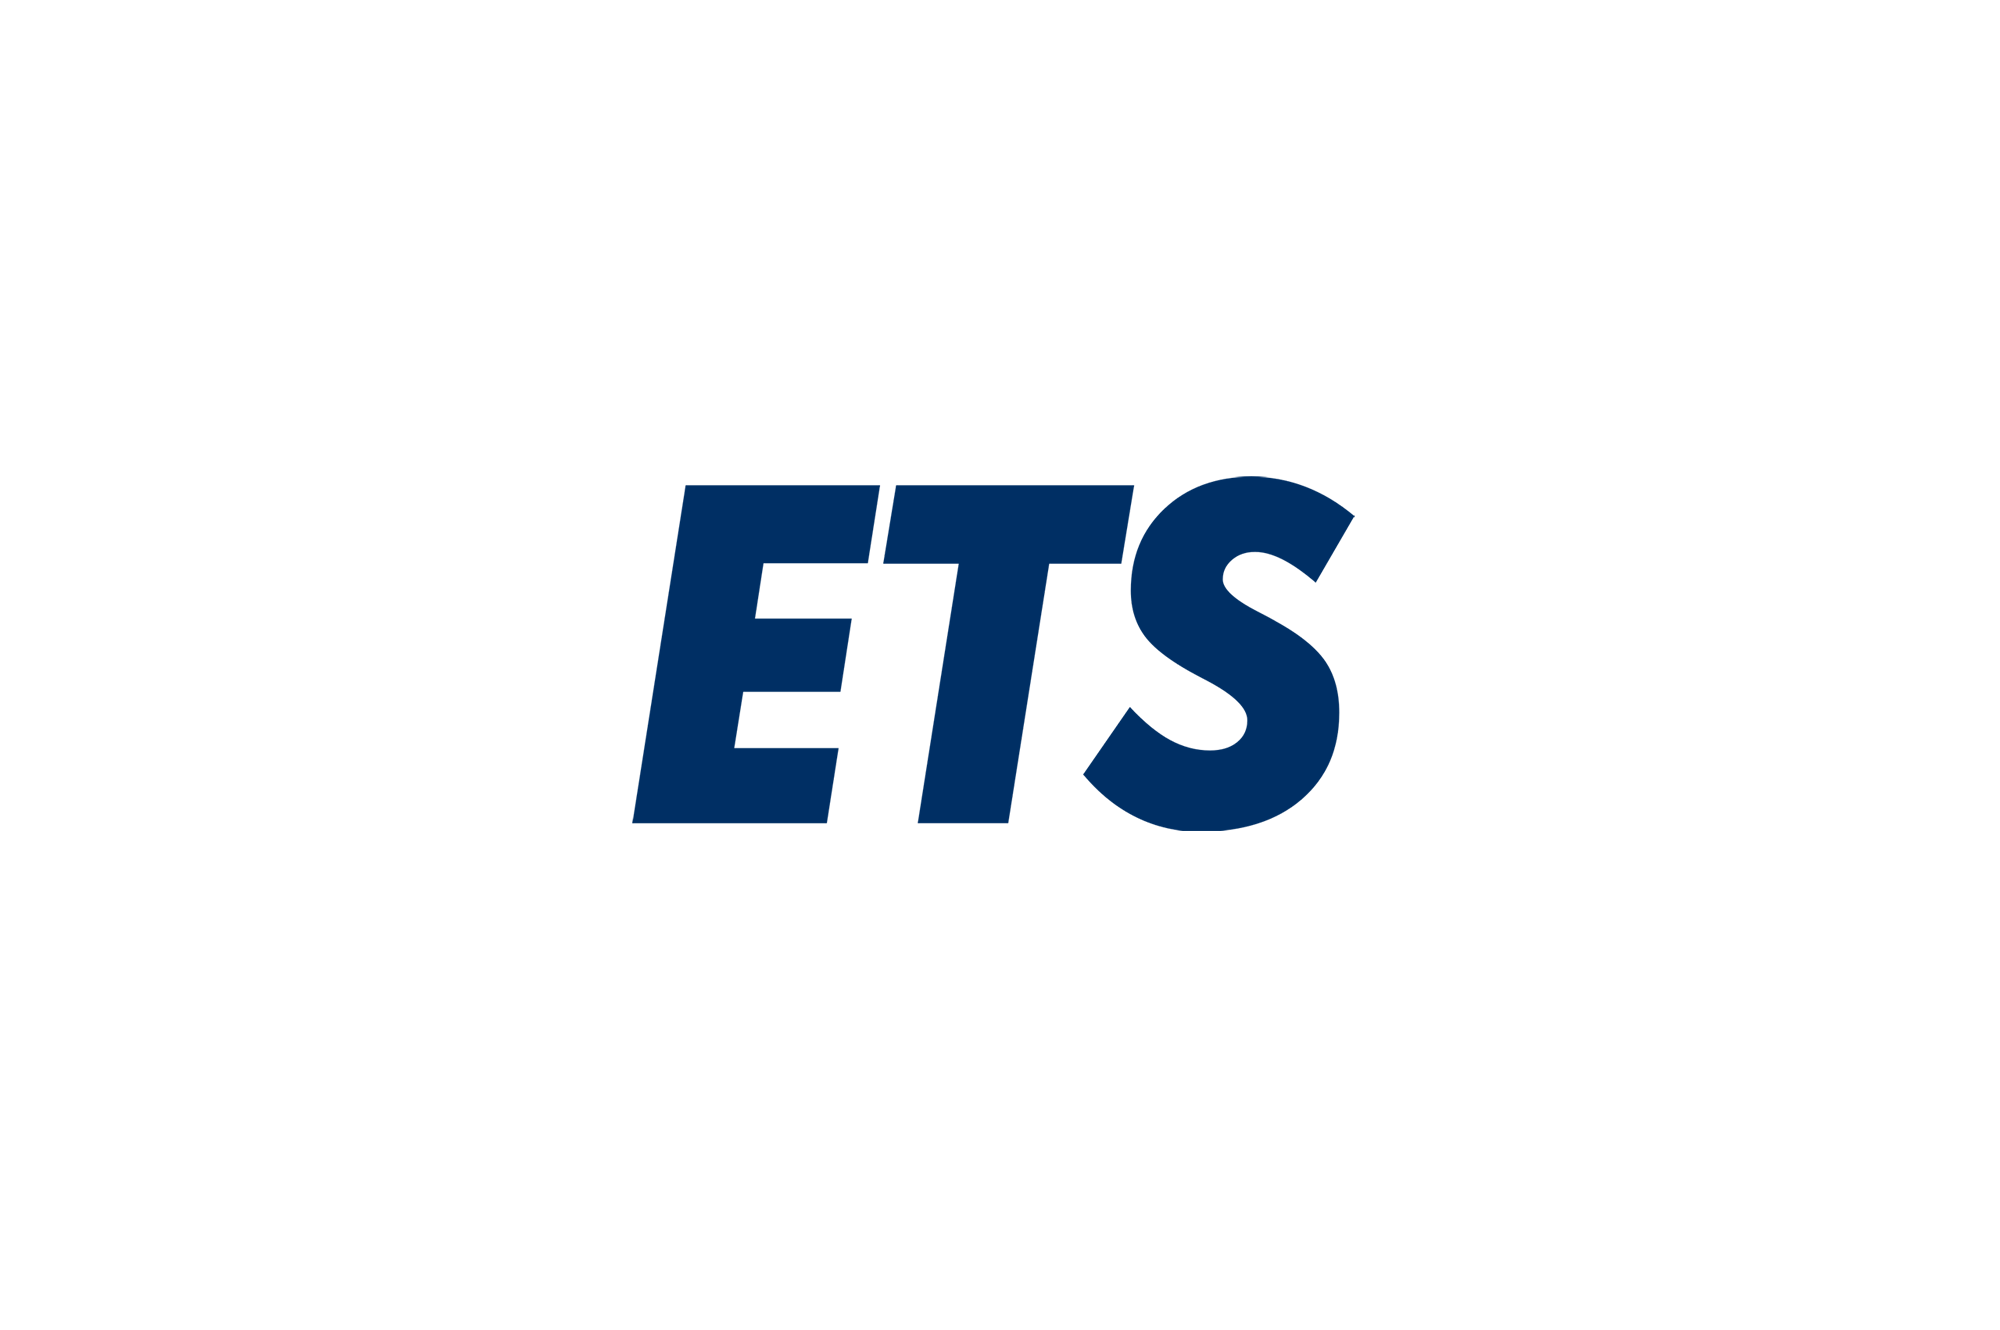 Edmonton Transit Service logo